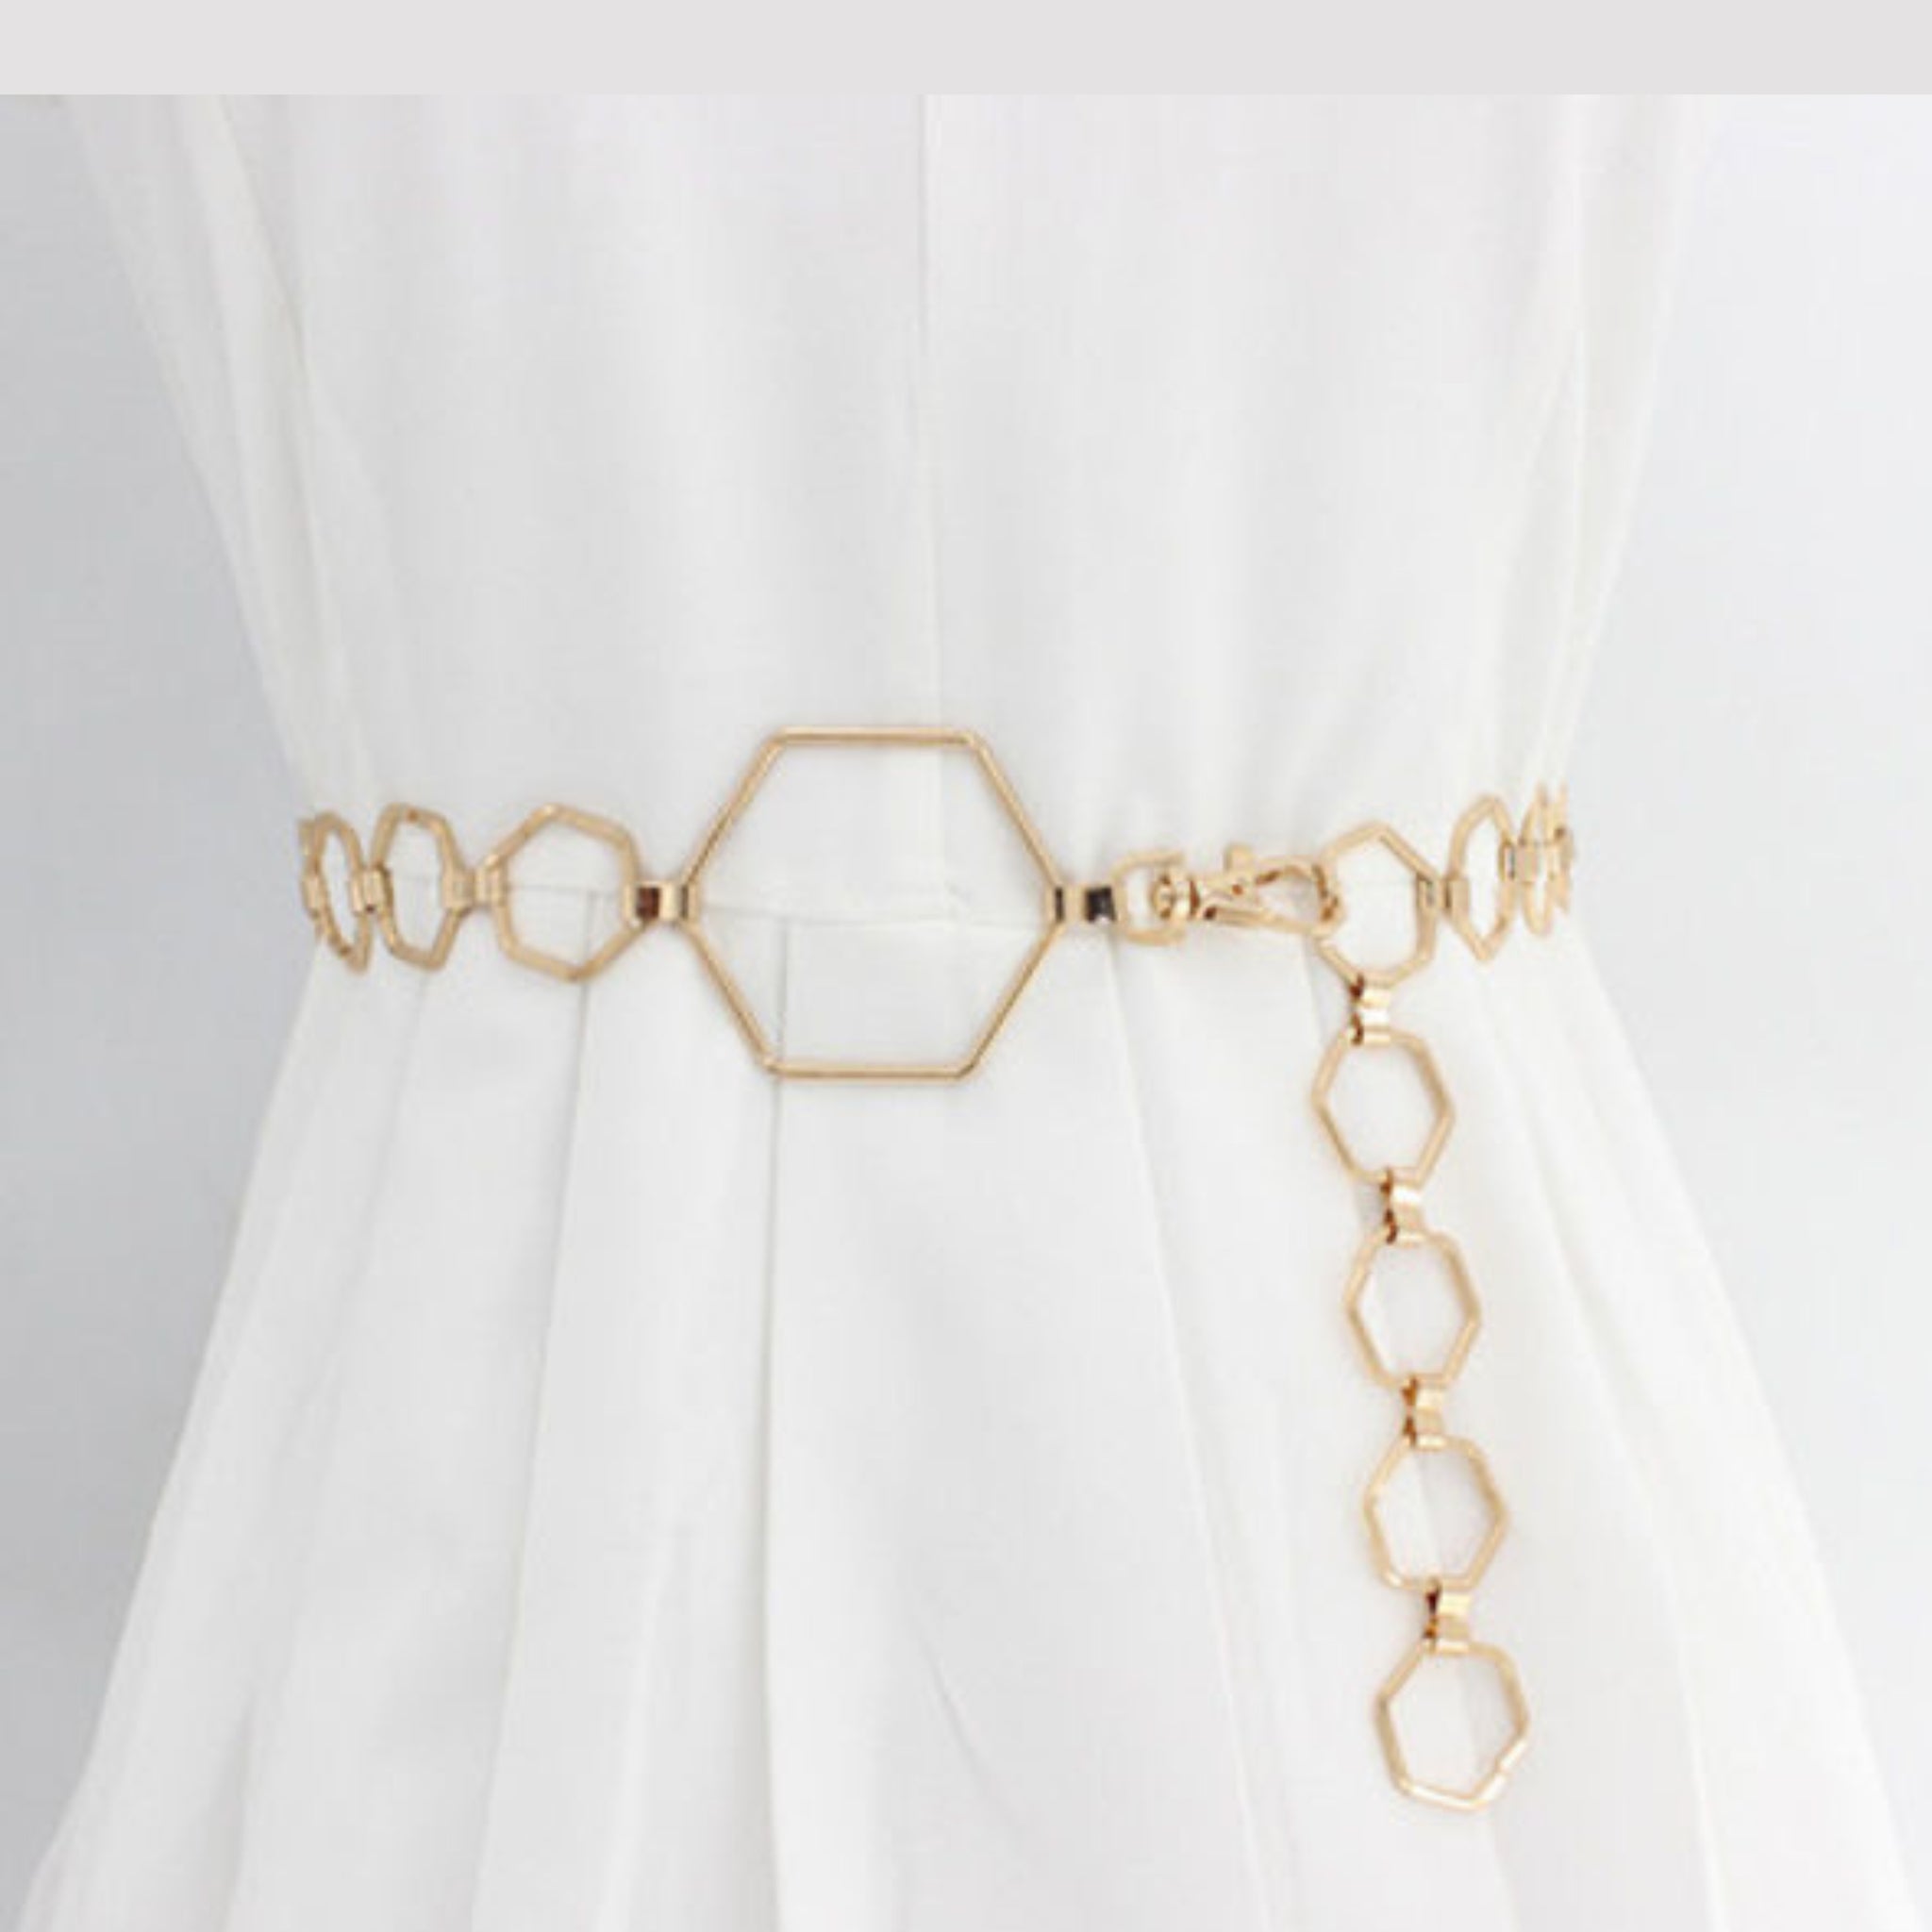 Sophisticated Serenade Belt-Chain Belt Hexagon